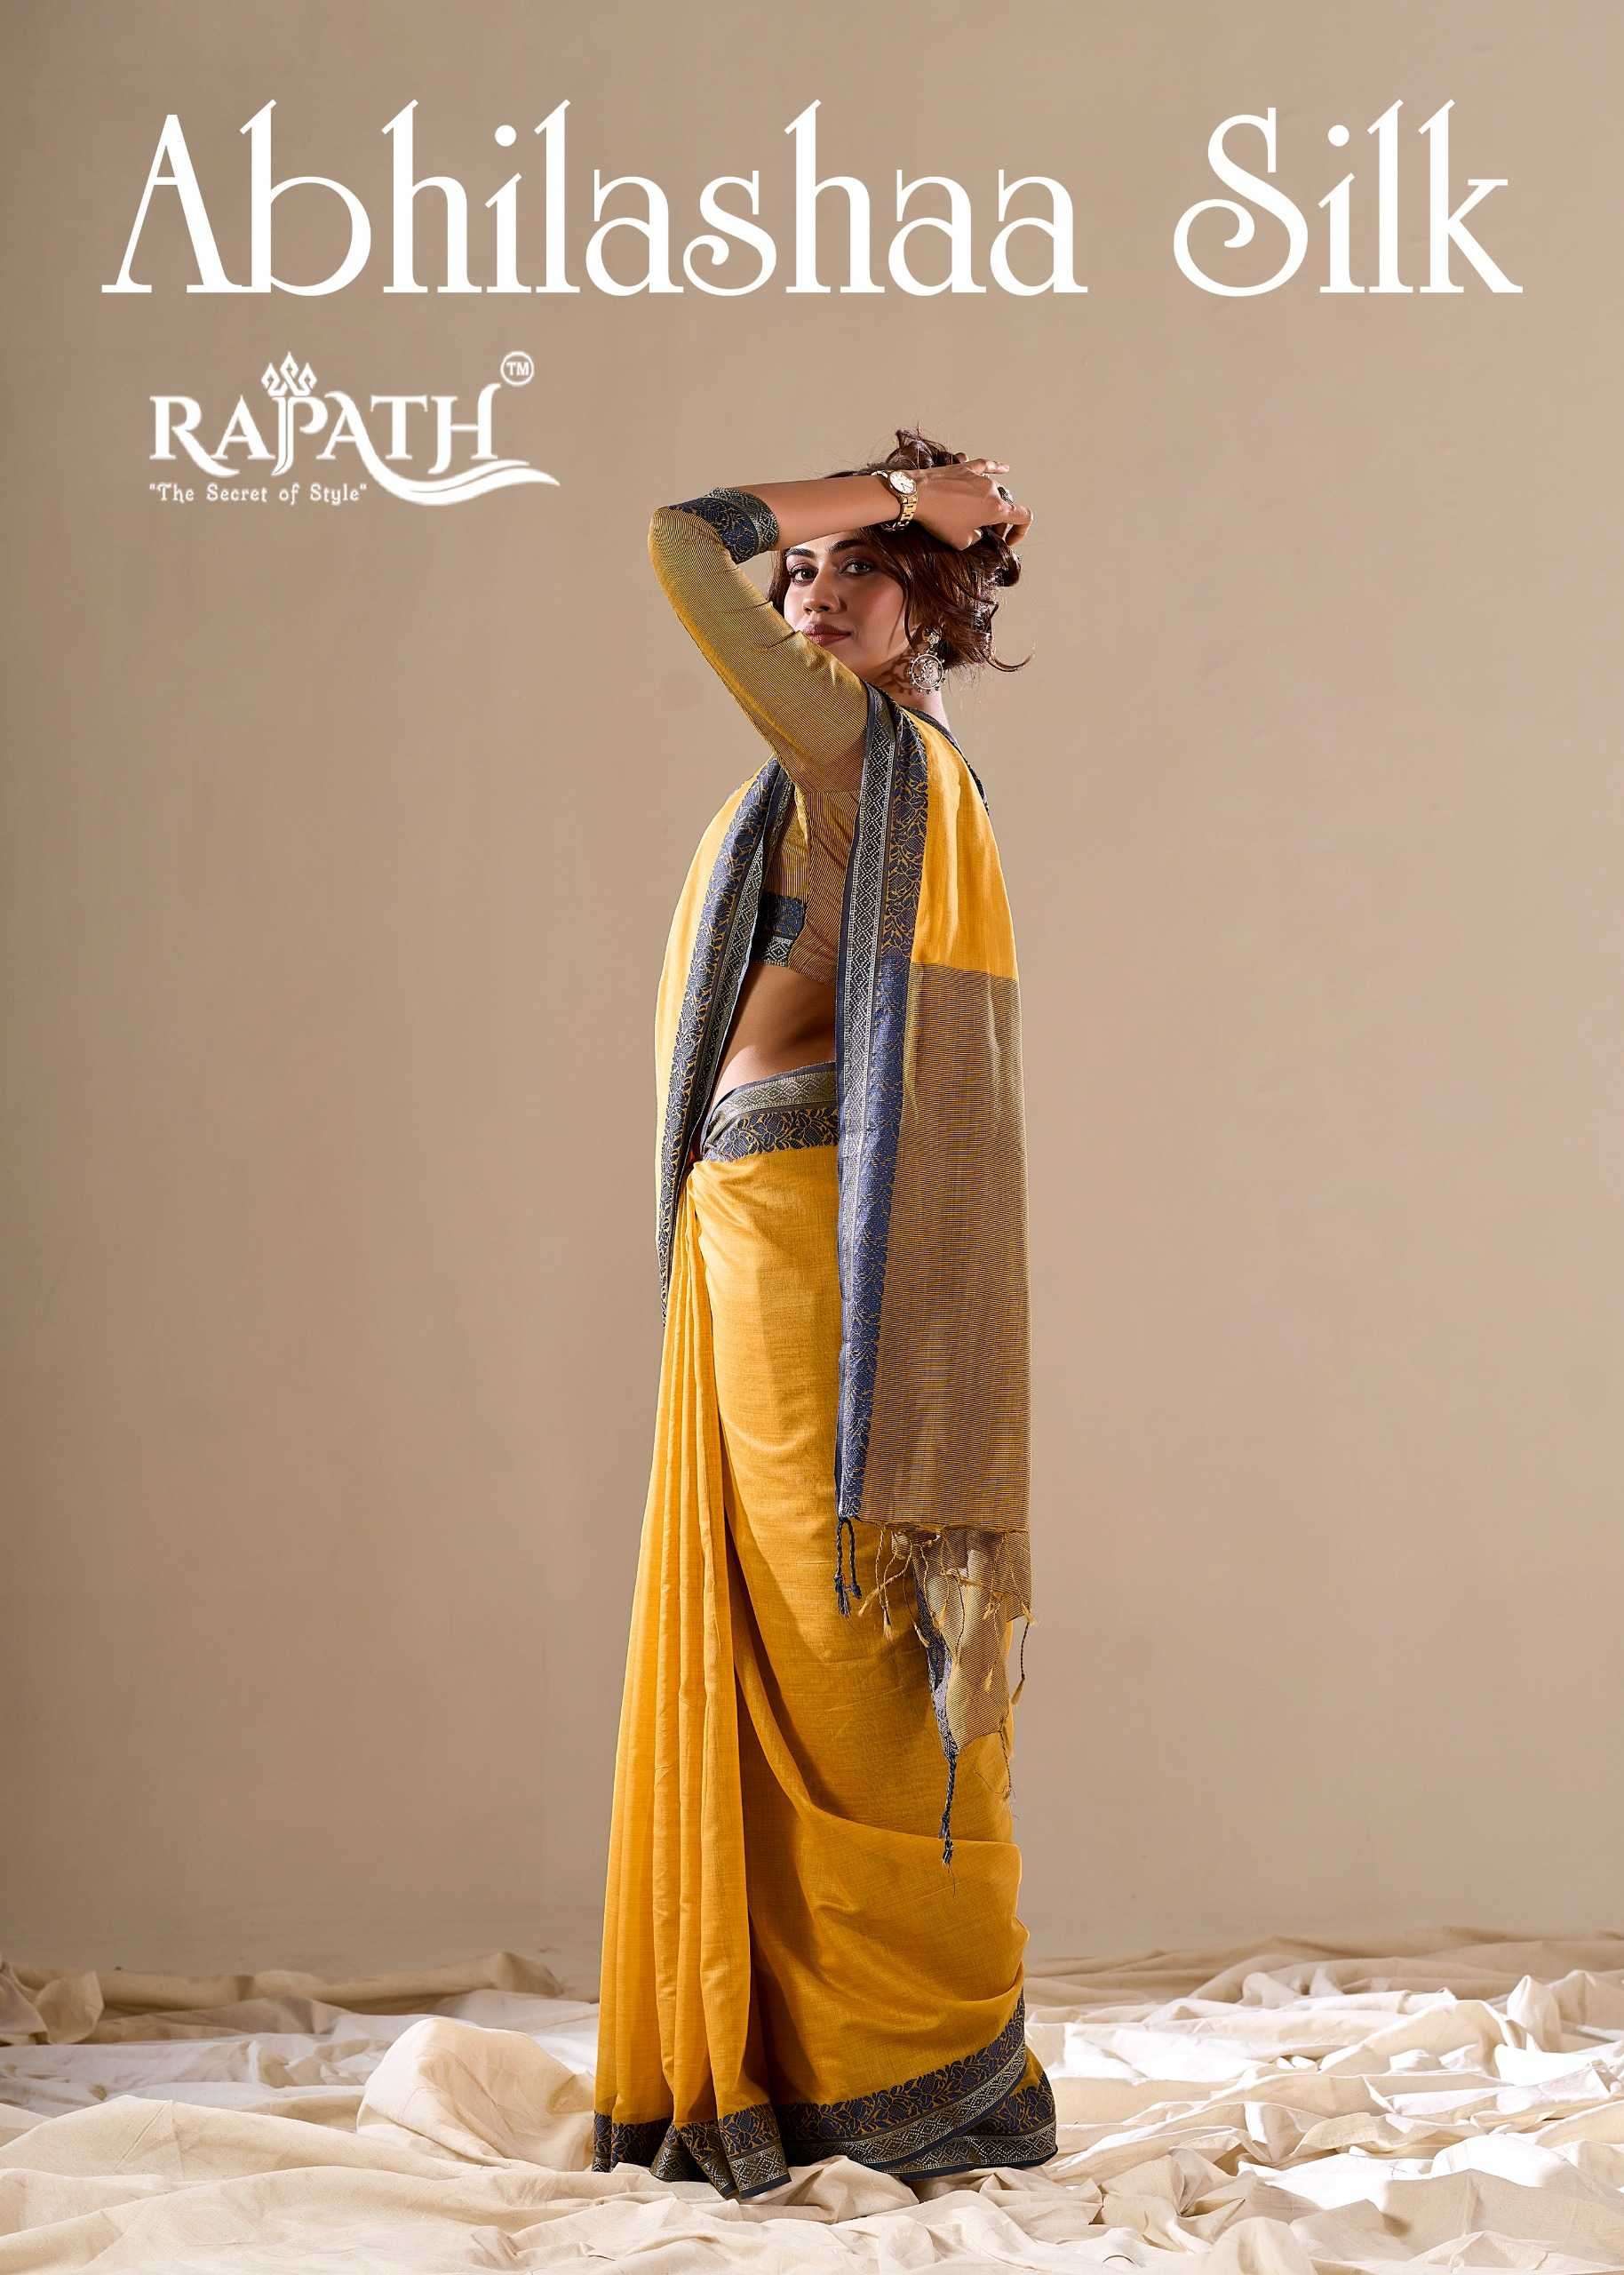 rajpath abhilasha silk series 530001-530006 Handloom Cotton saree